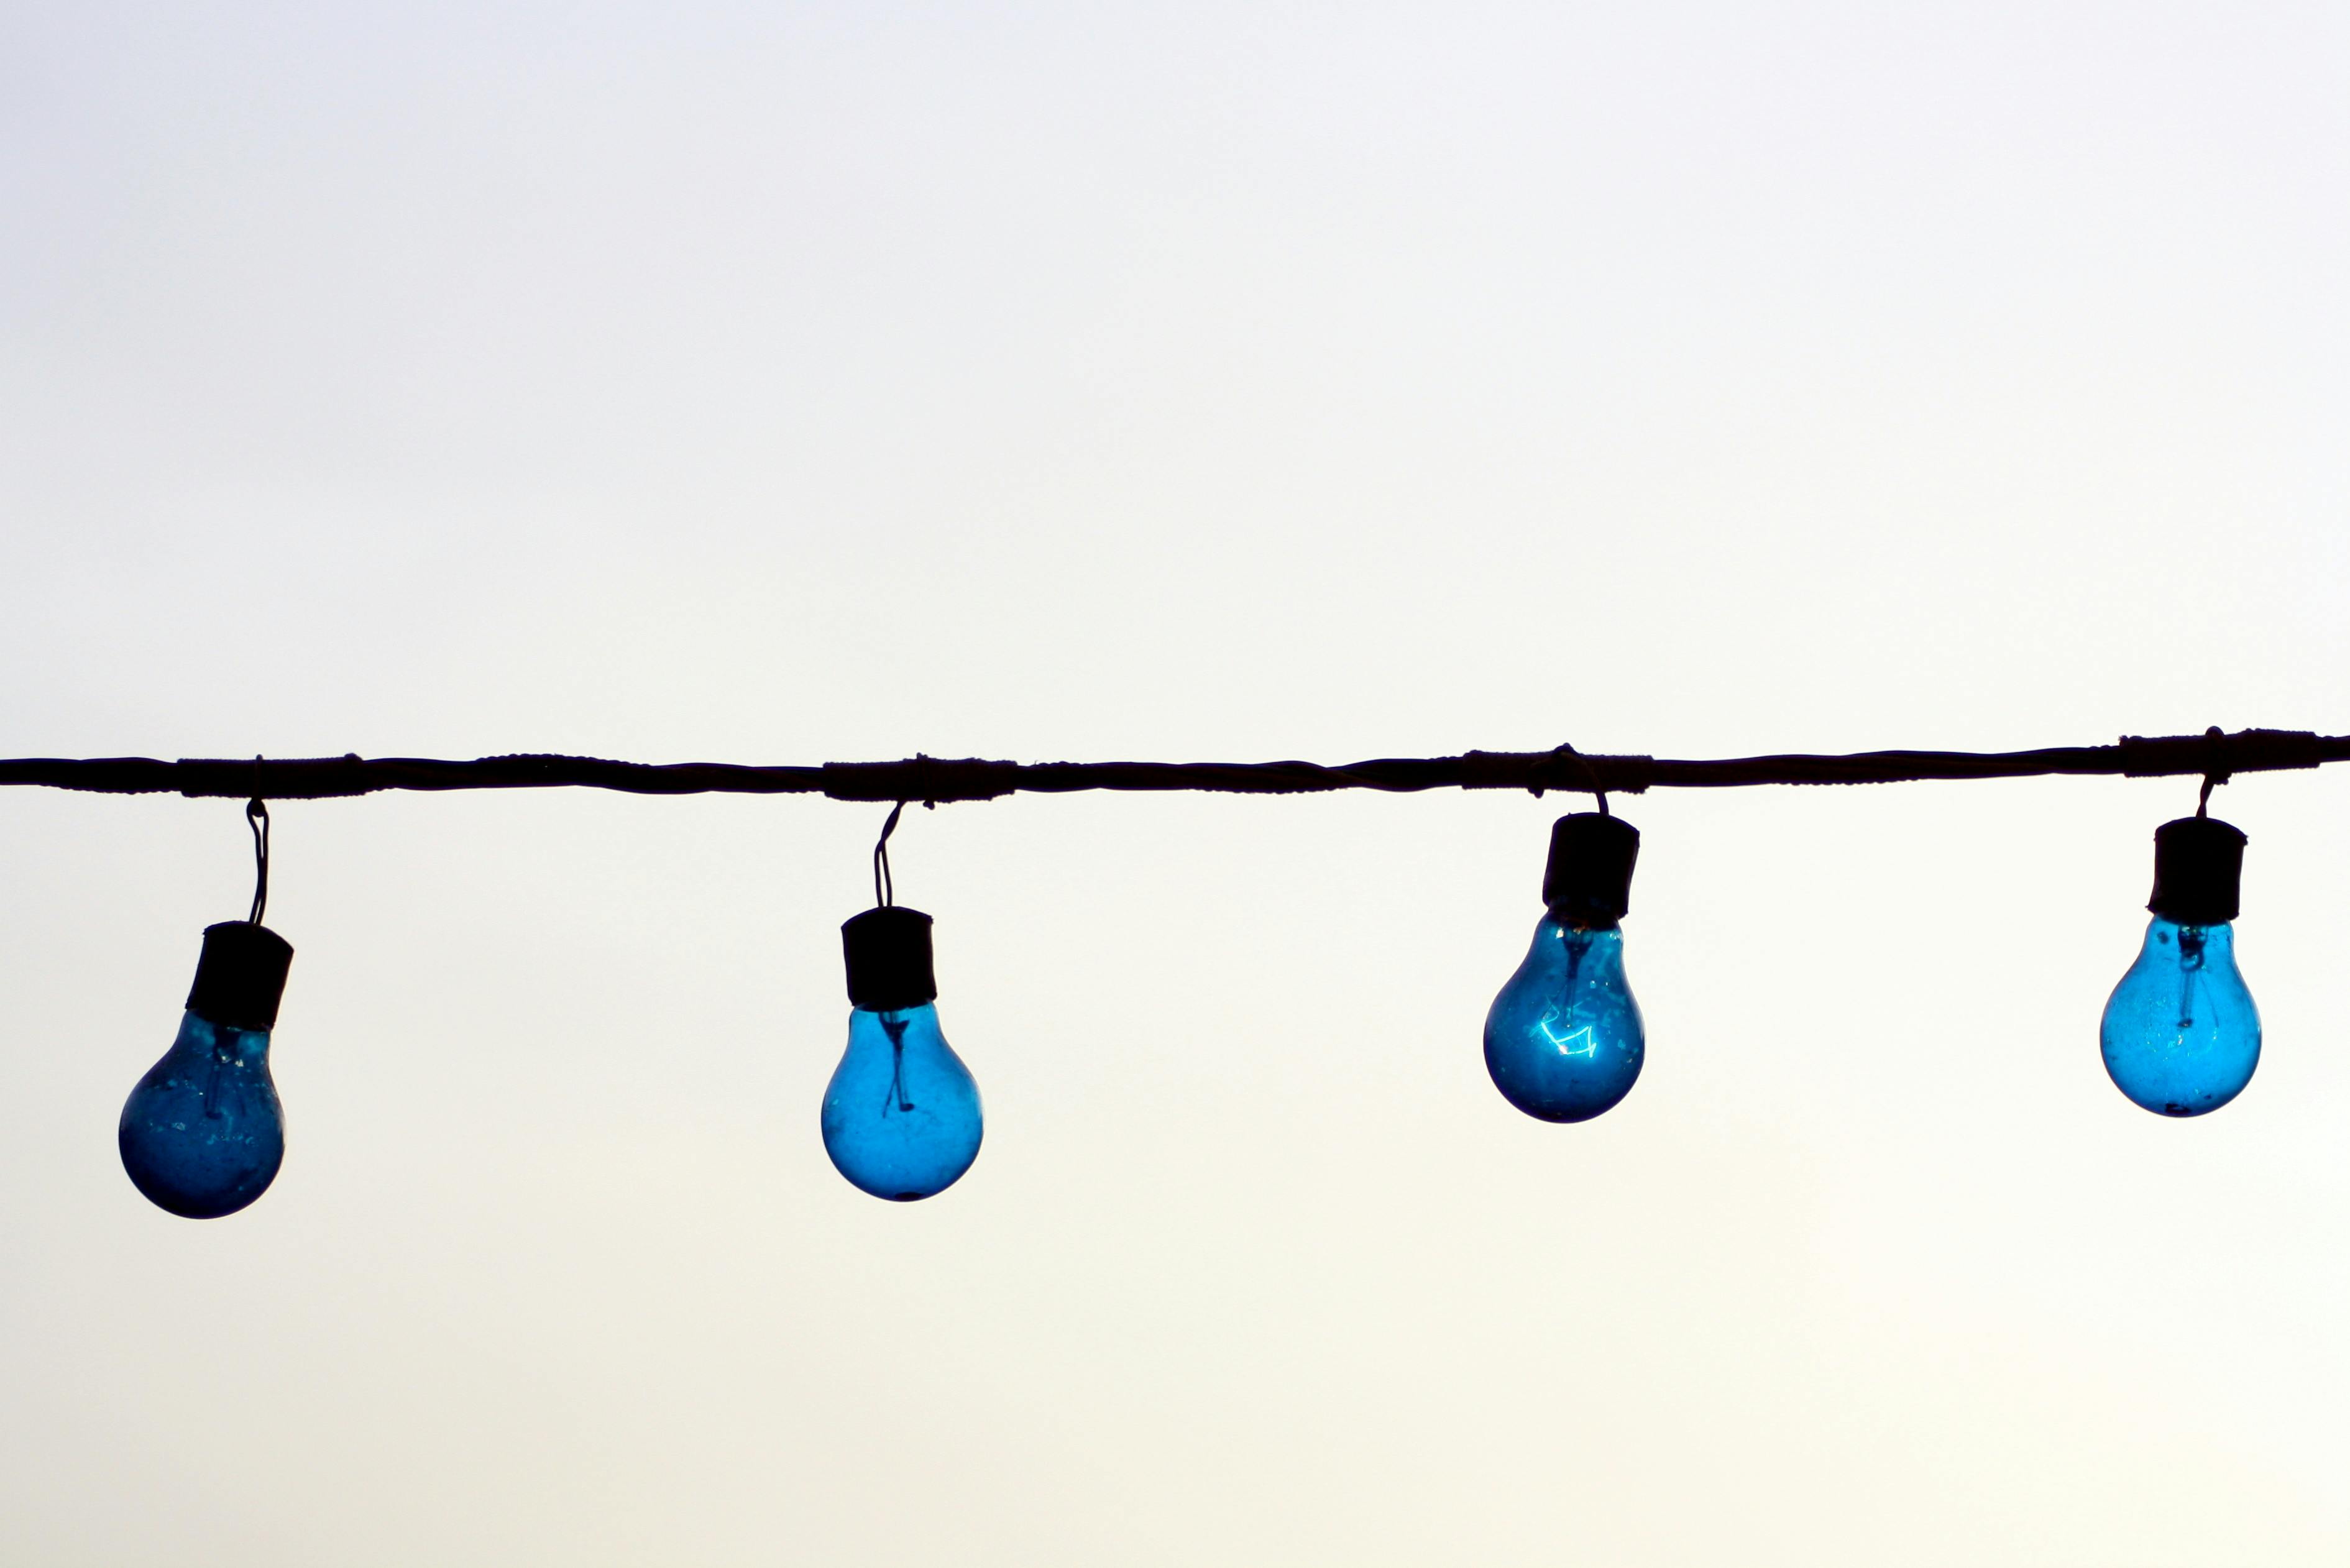 A string of blue light bulbs | Source: Pexels